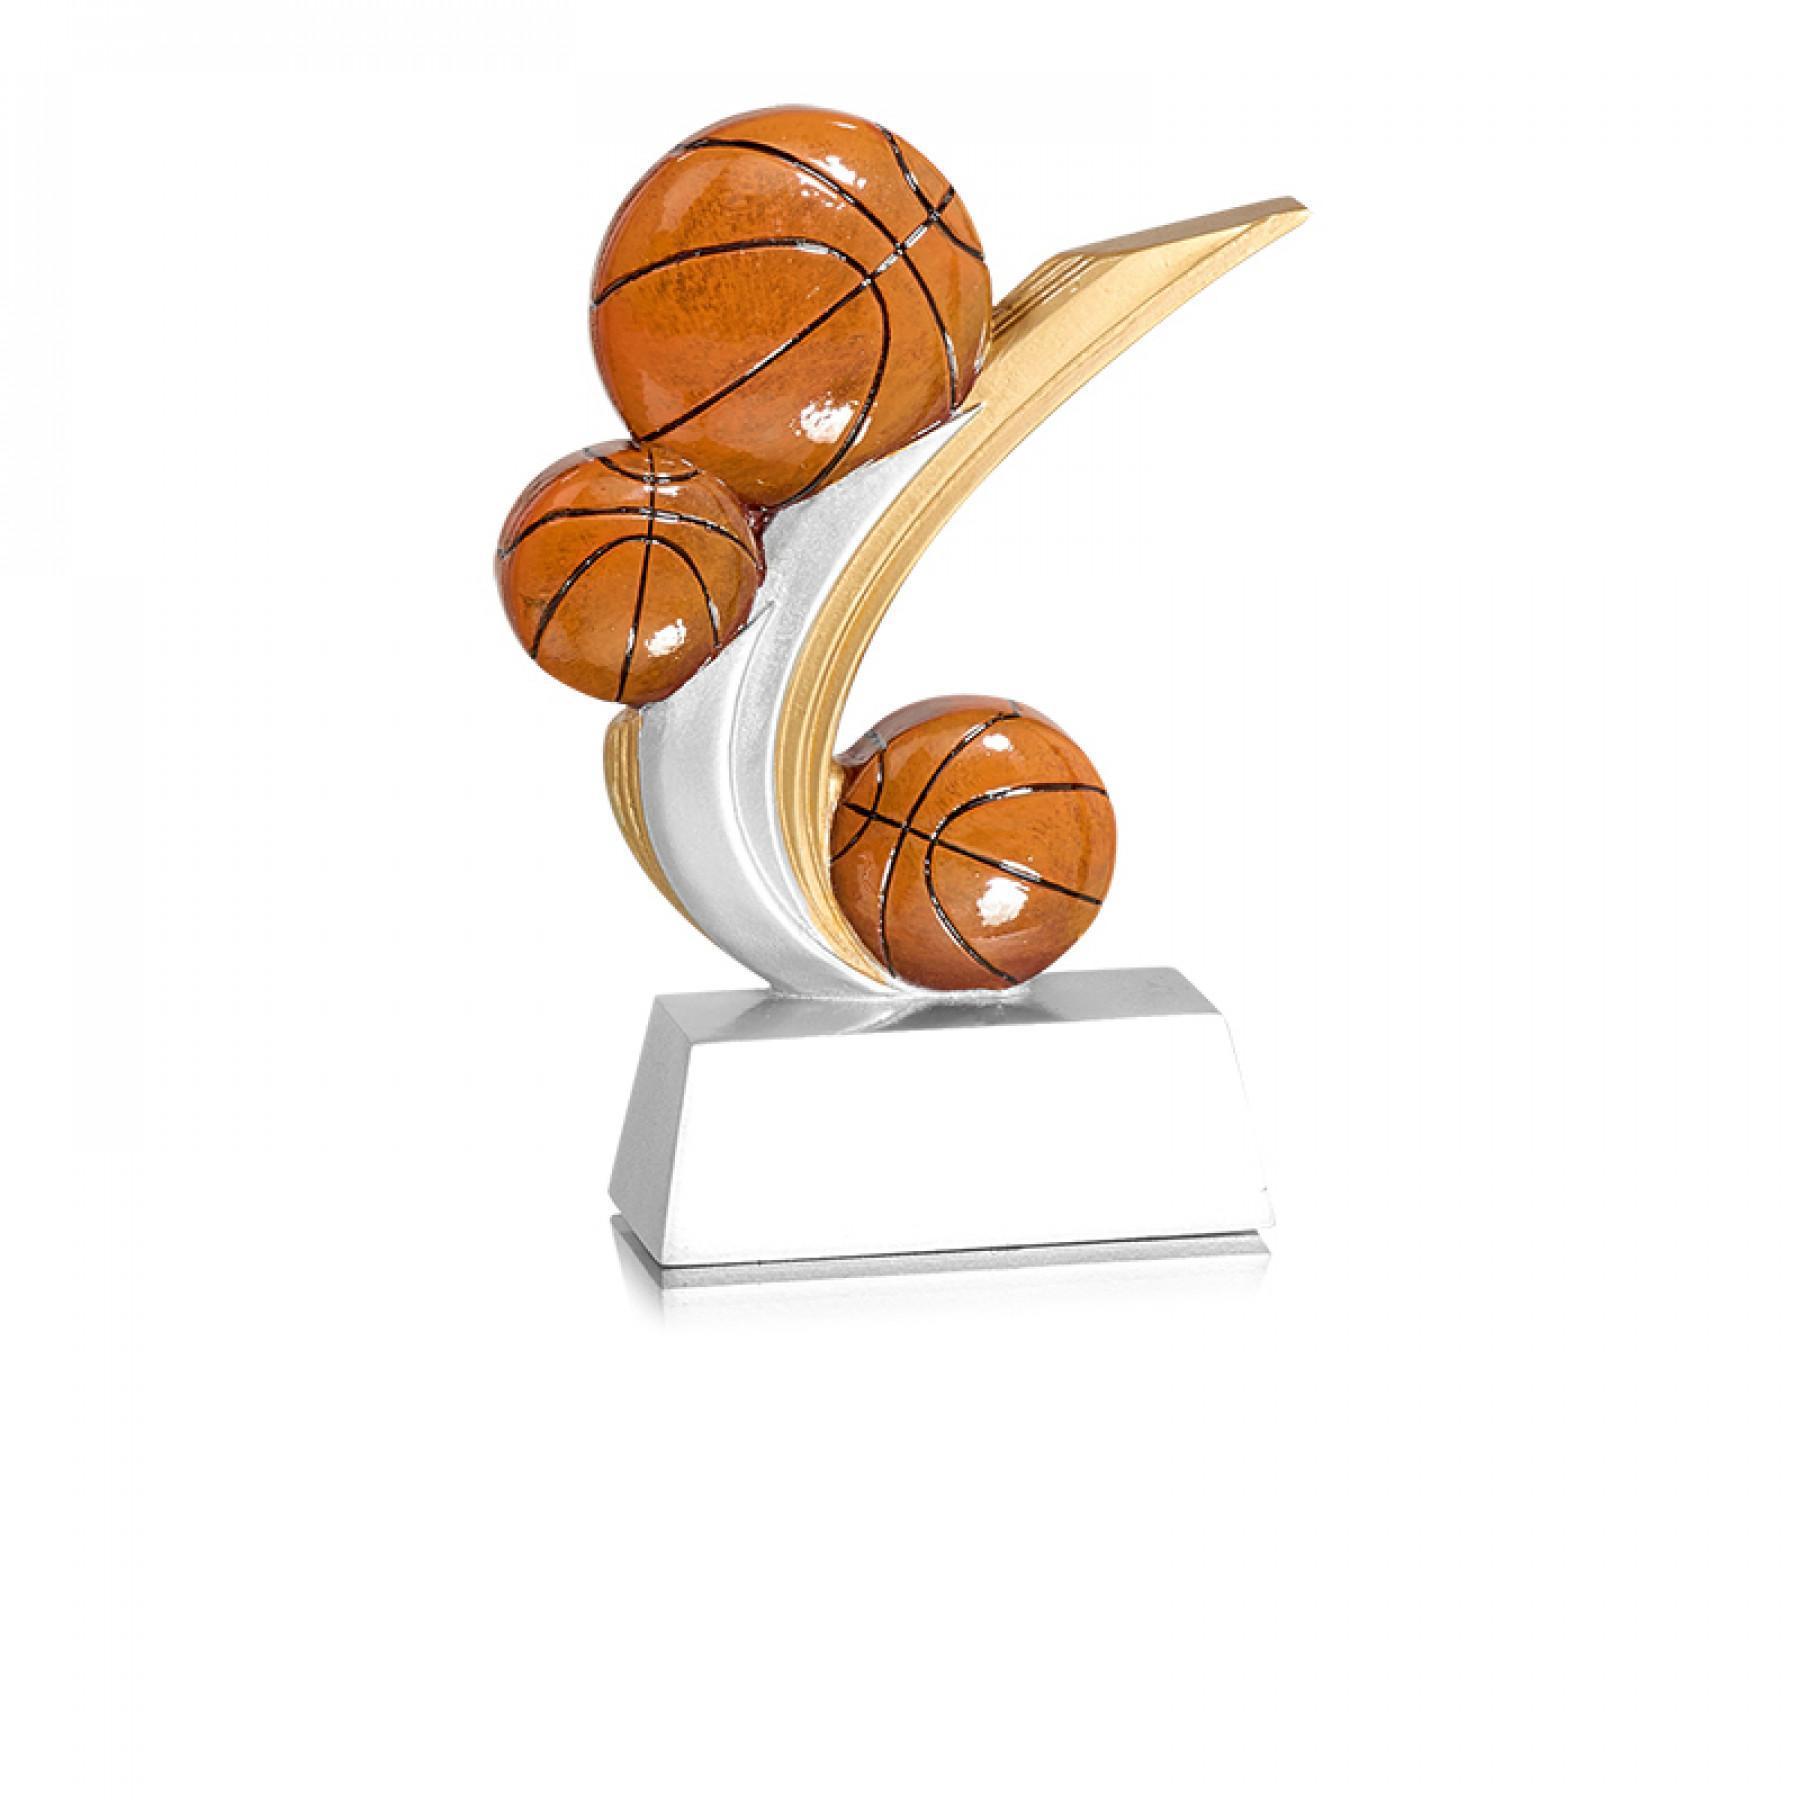 Basketbolltrofé i harts 31900 (14 cm)